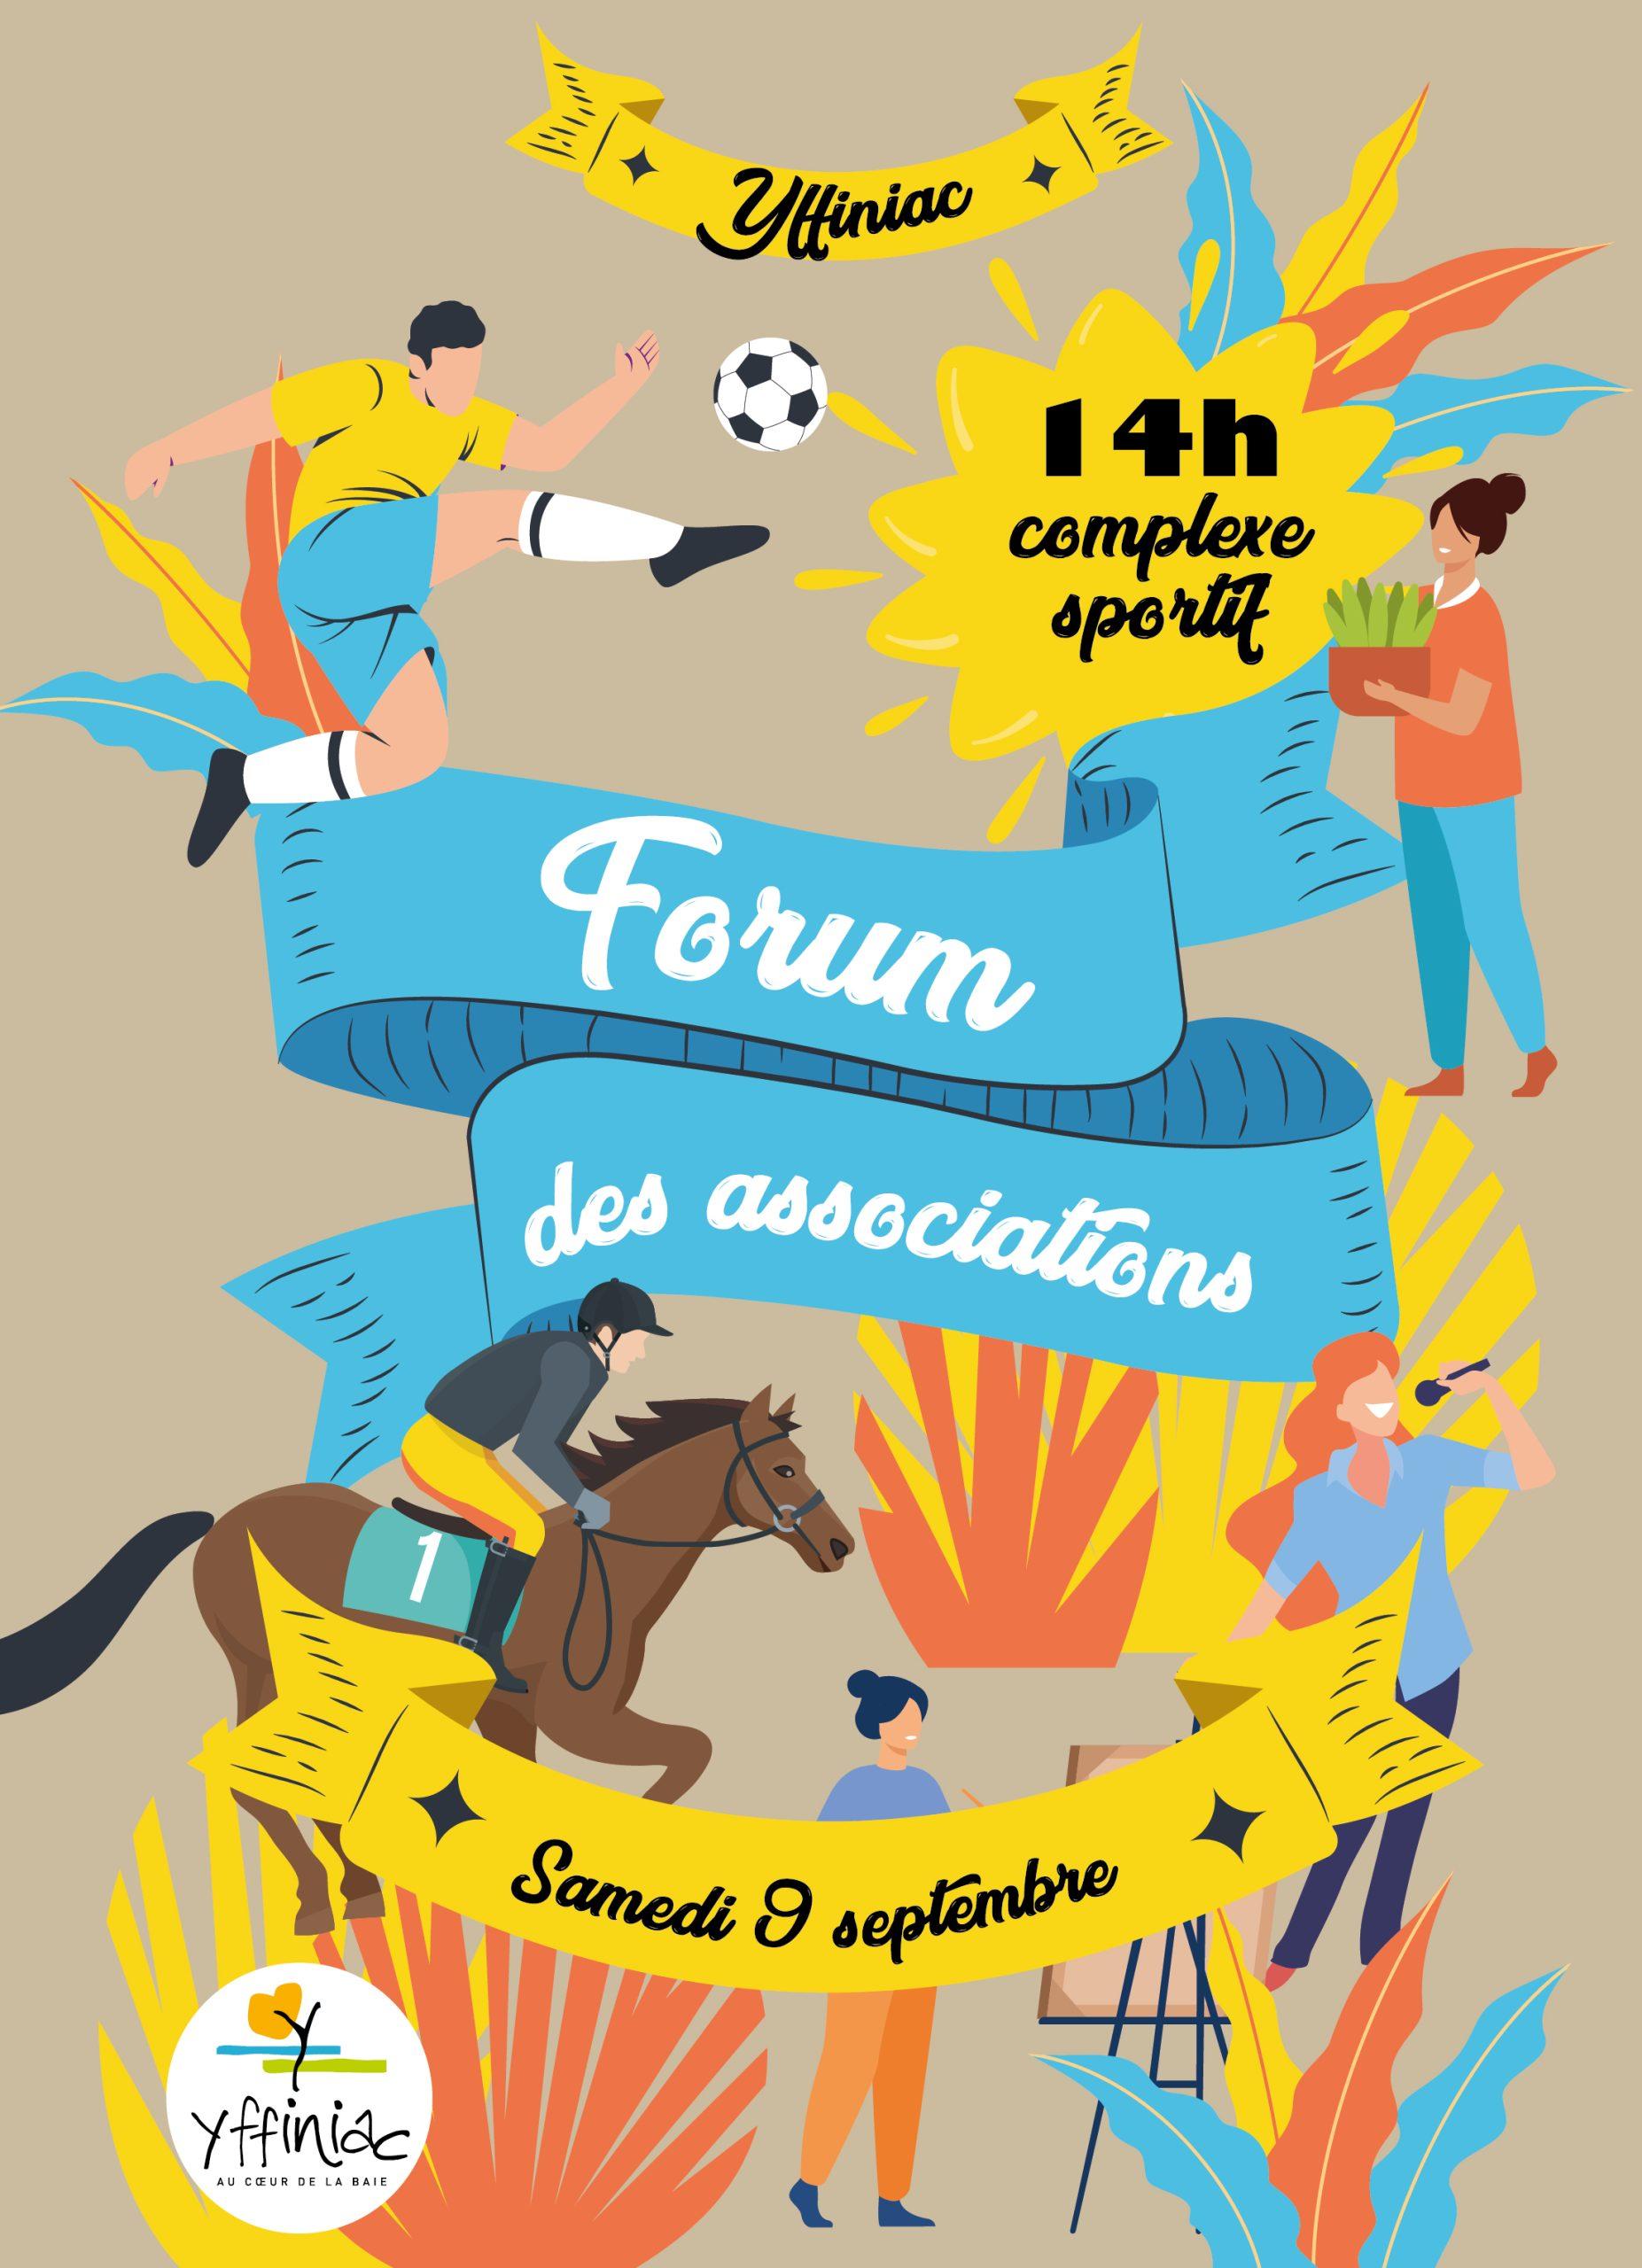 Forum des associations samedi 9 septembre